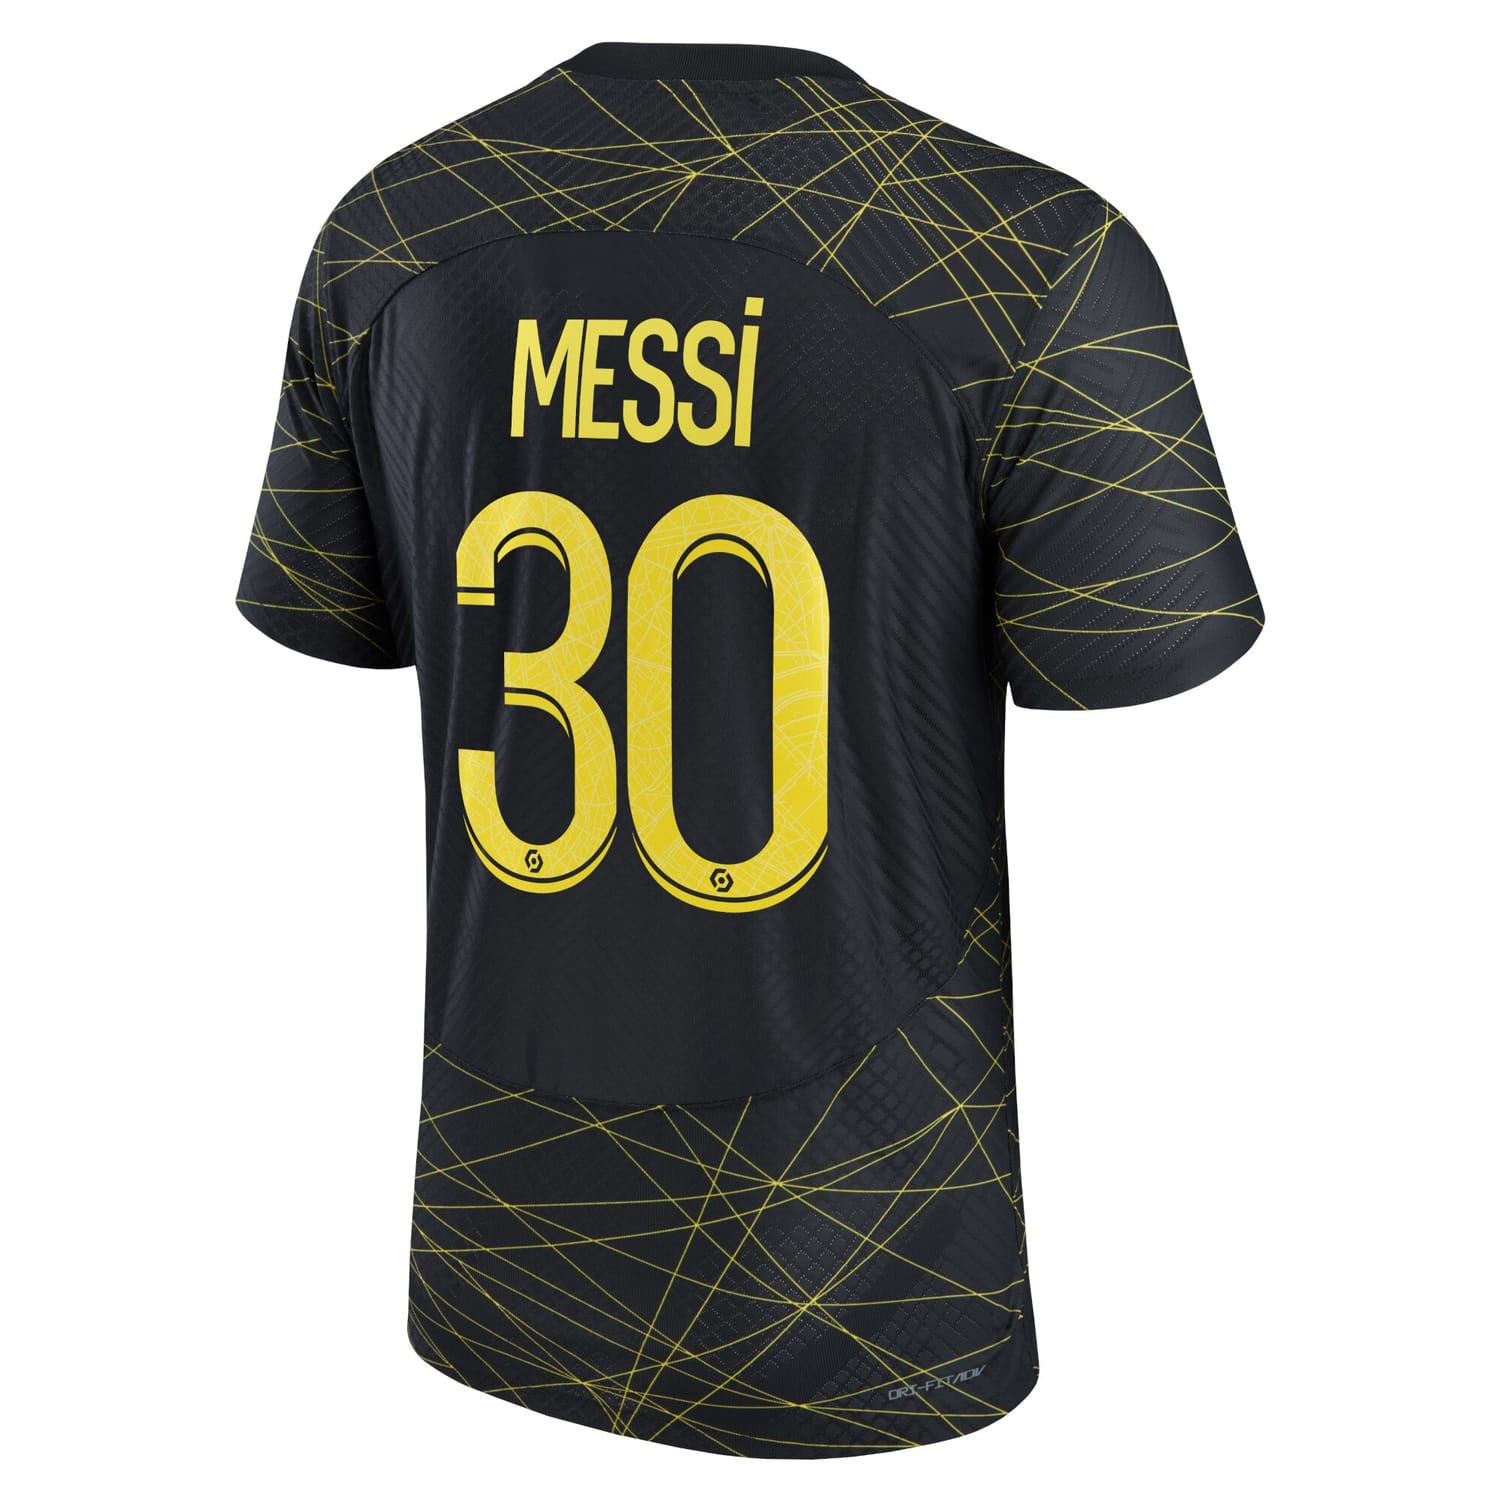 Ligue 1 Paris Saint-Germain Fourth Authentic Jersey Shirt 2022-23 player Lionel Messi 30 printing for Men